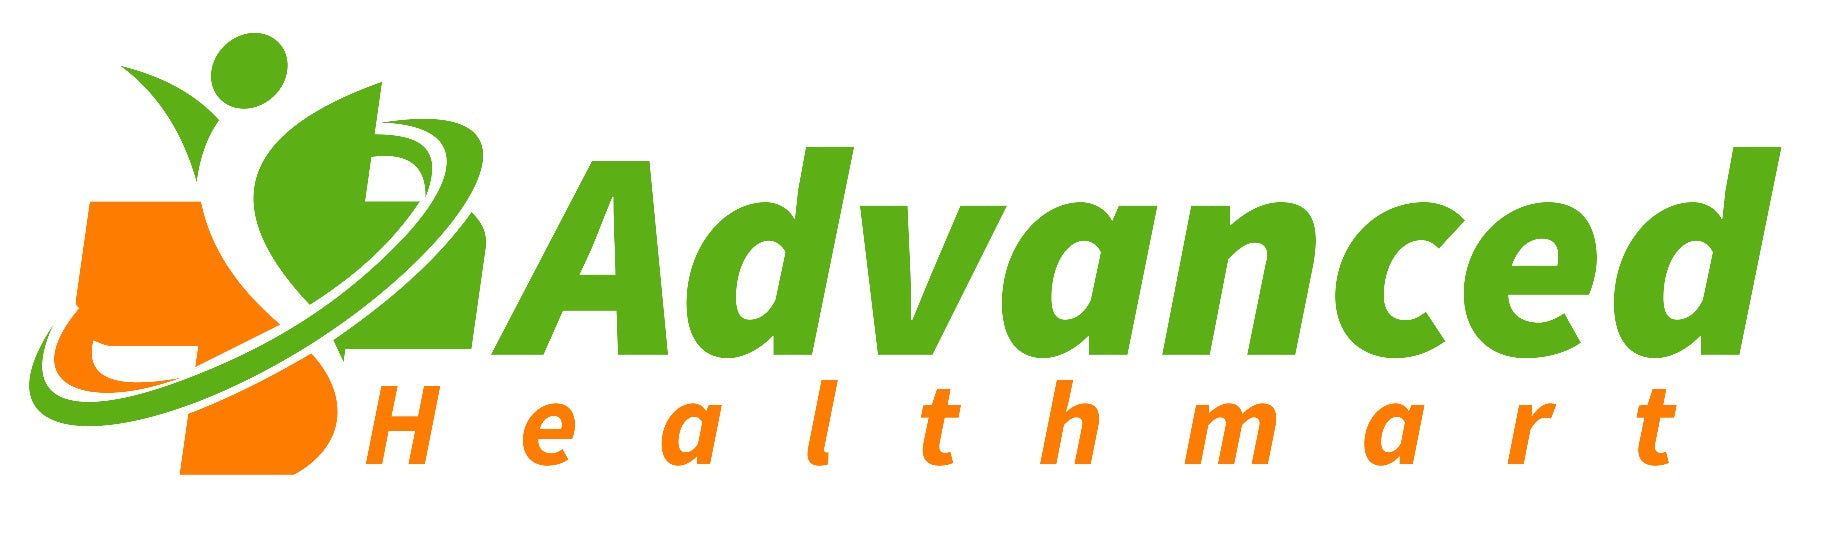 Advanced Healthmart